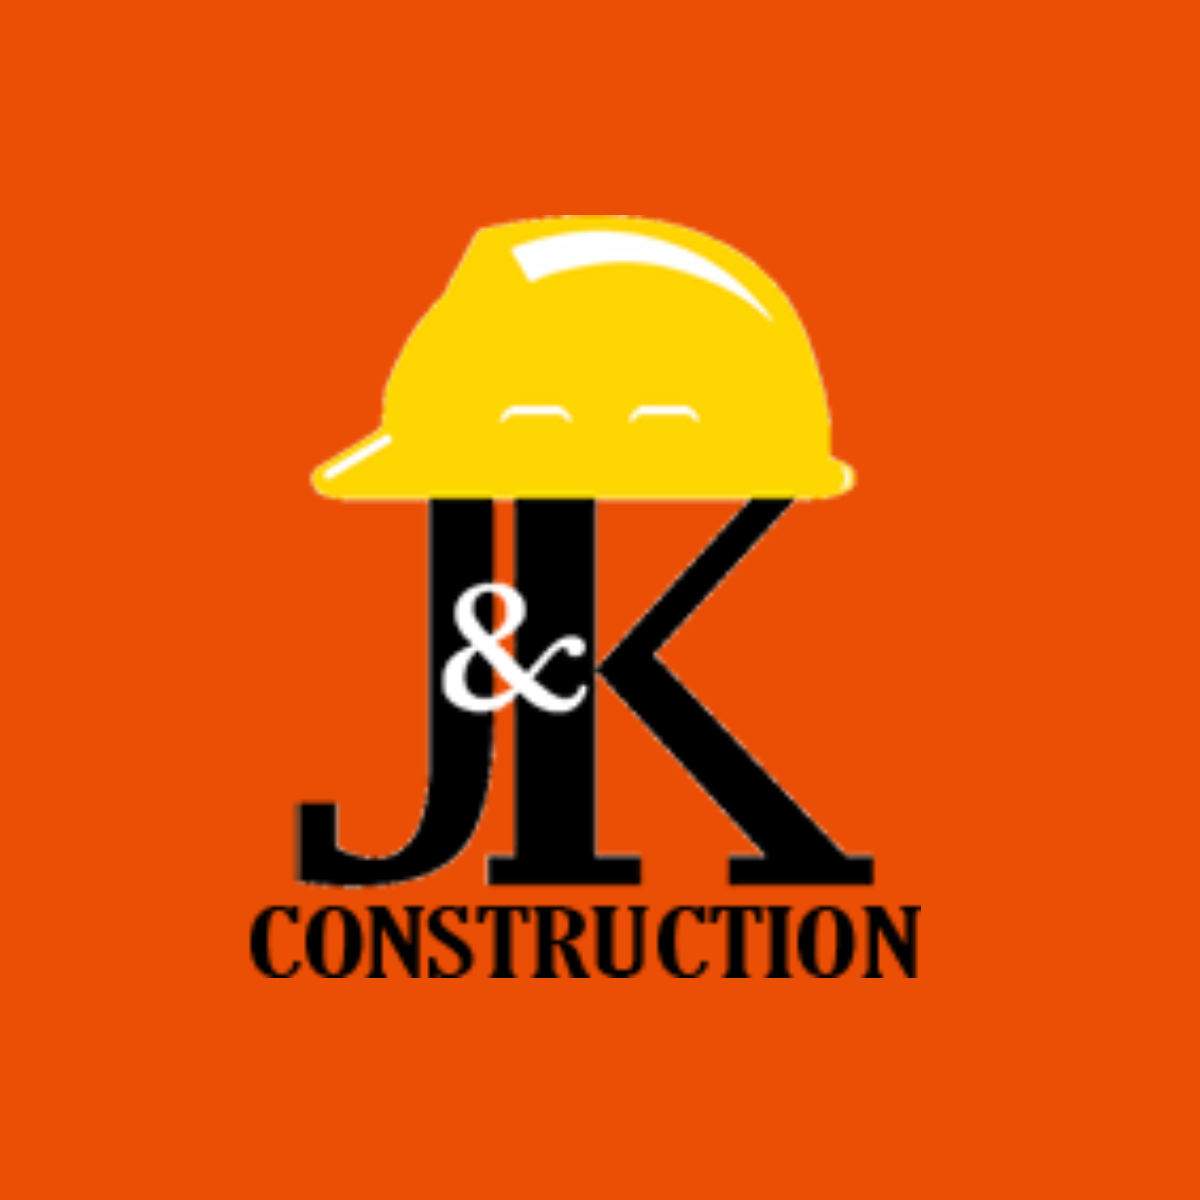 J&K General Construction